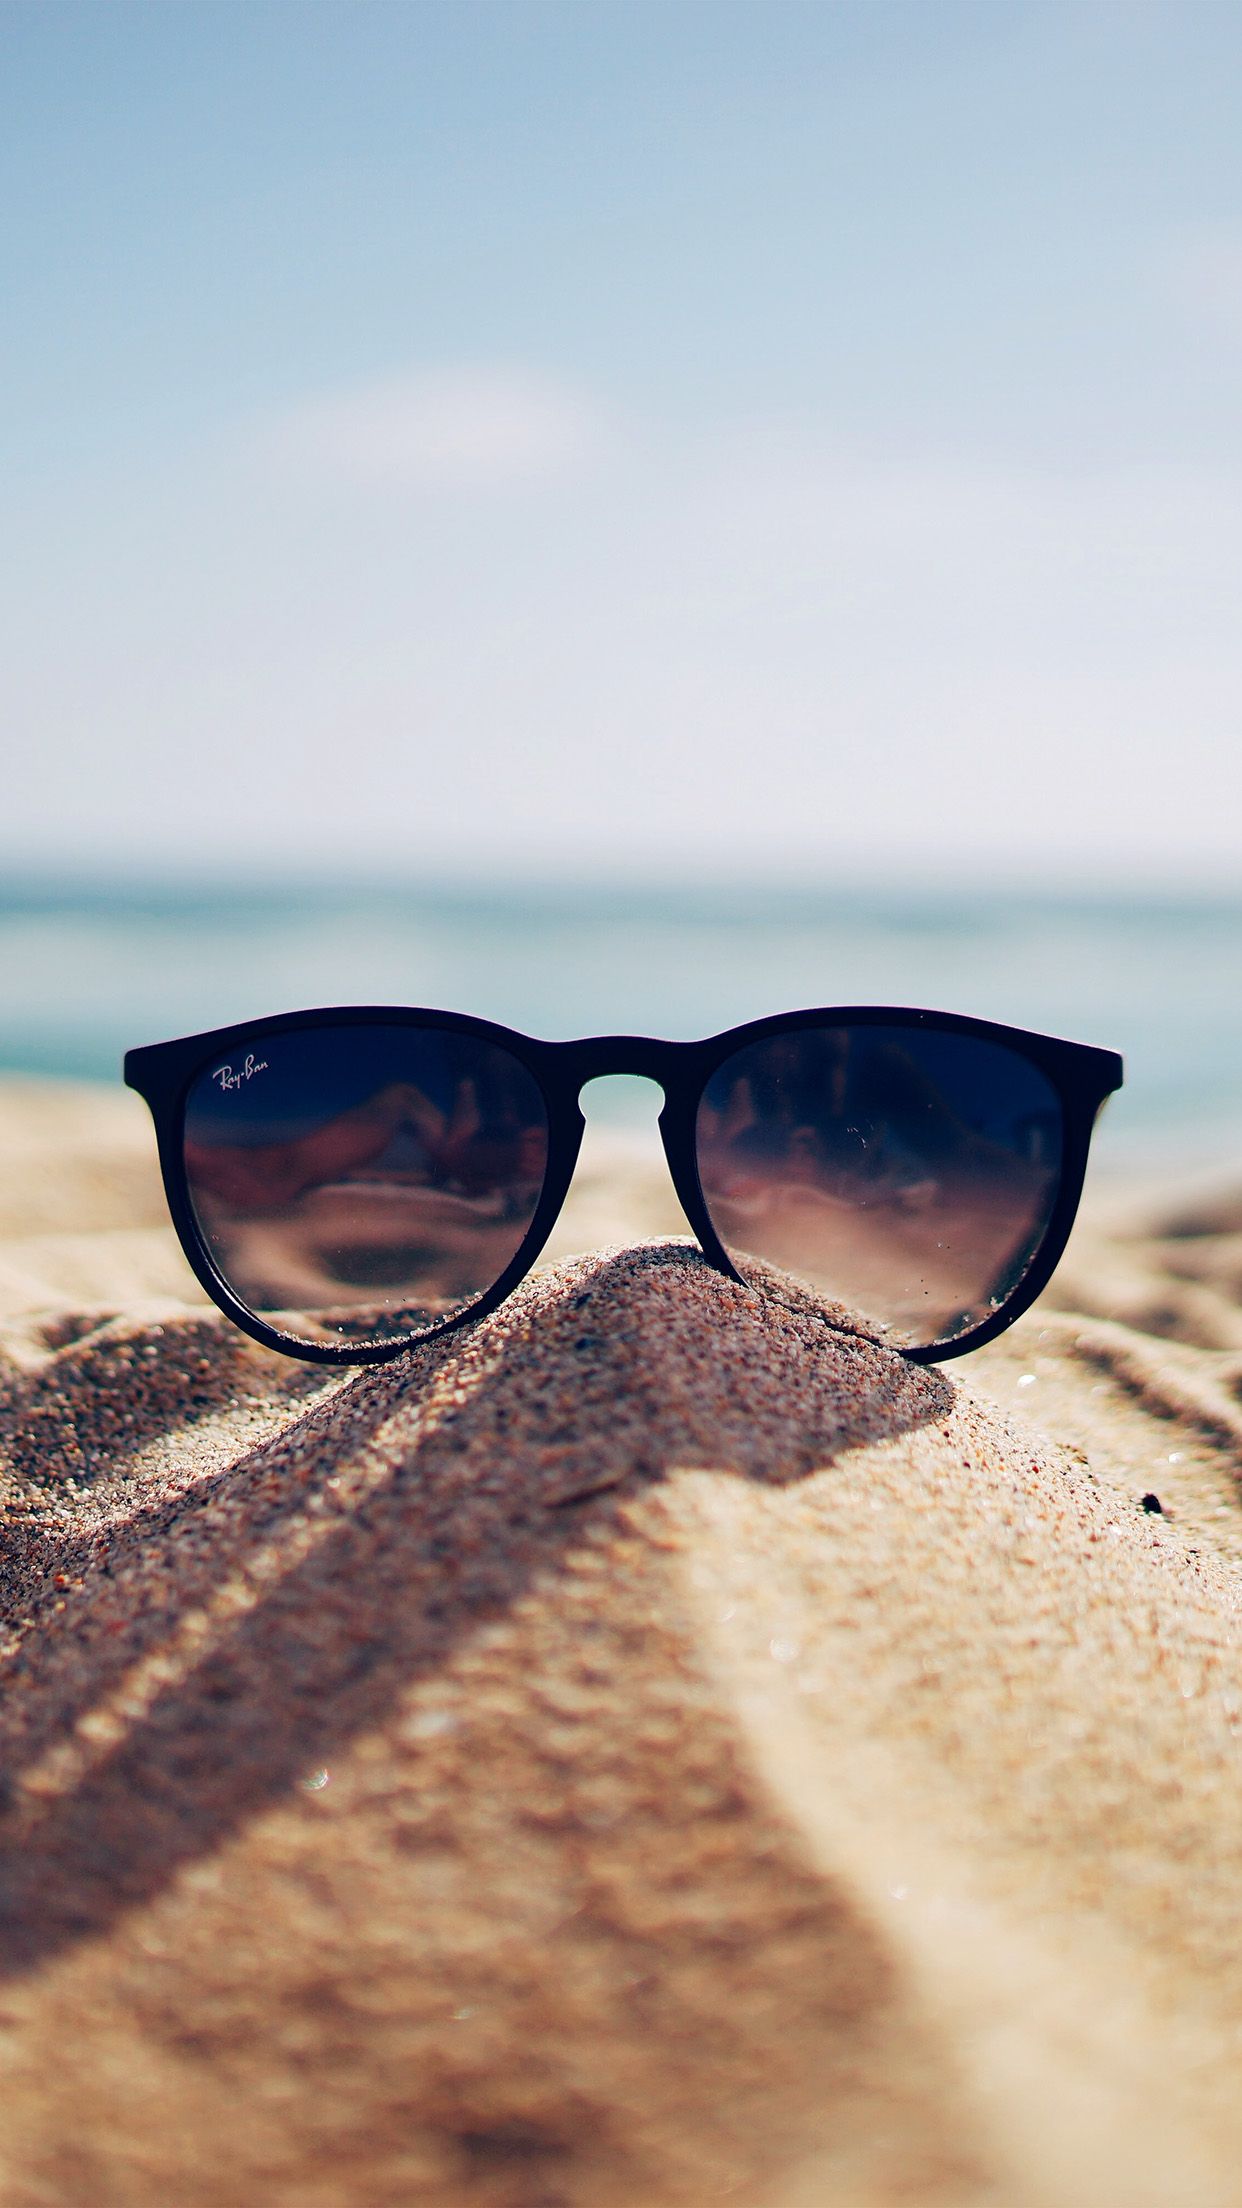 A pair of sunglasses on the sand - Sun